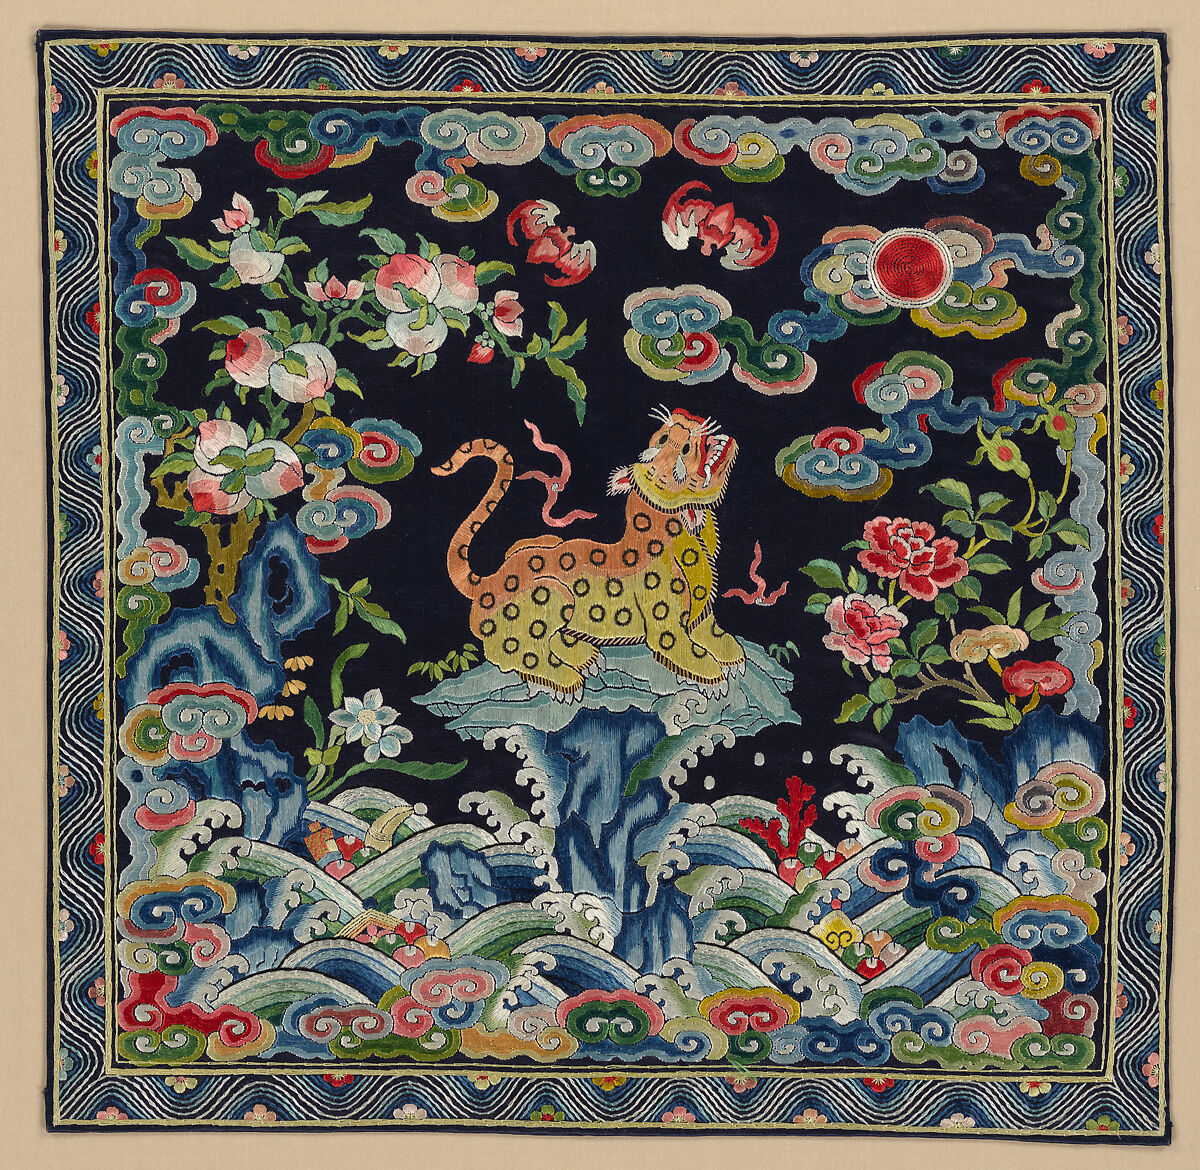 Rank badge with leopard, Silk and metallic thread embroidery on silk satin, China 